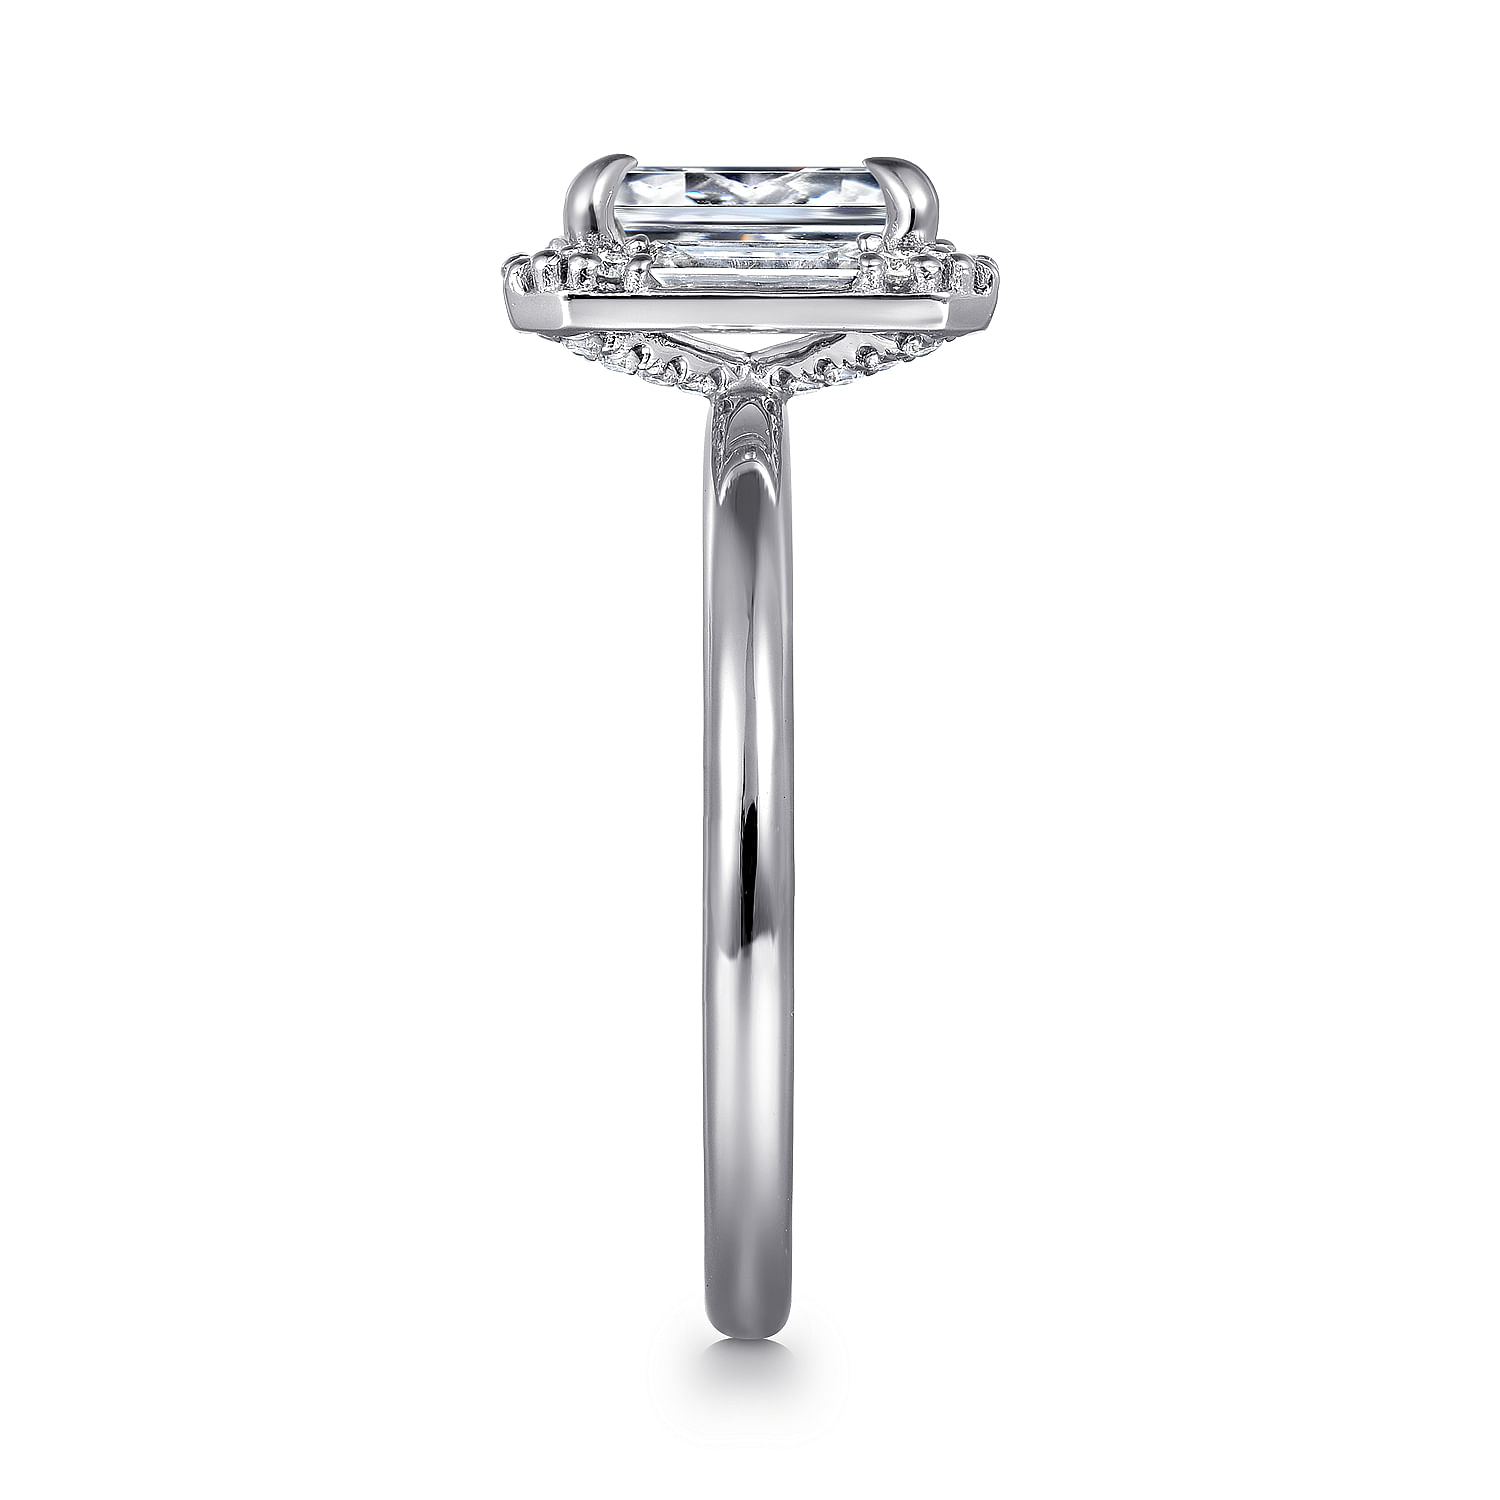 Art Deco 14K White Gold Halo Emerald Cut Diamond Engagement Ring